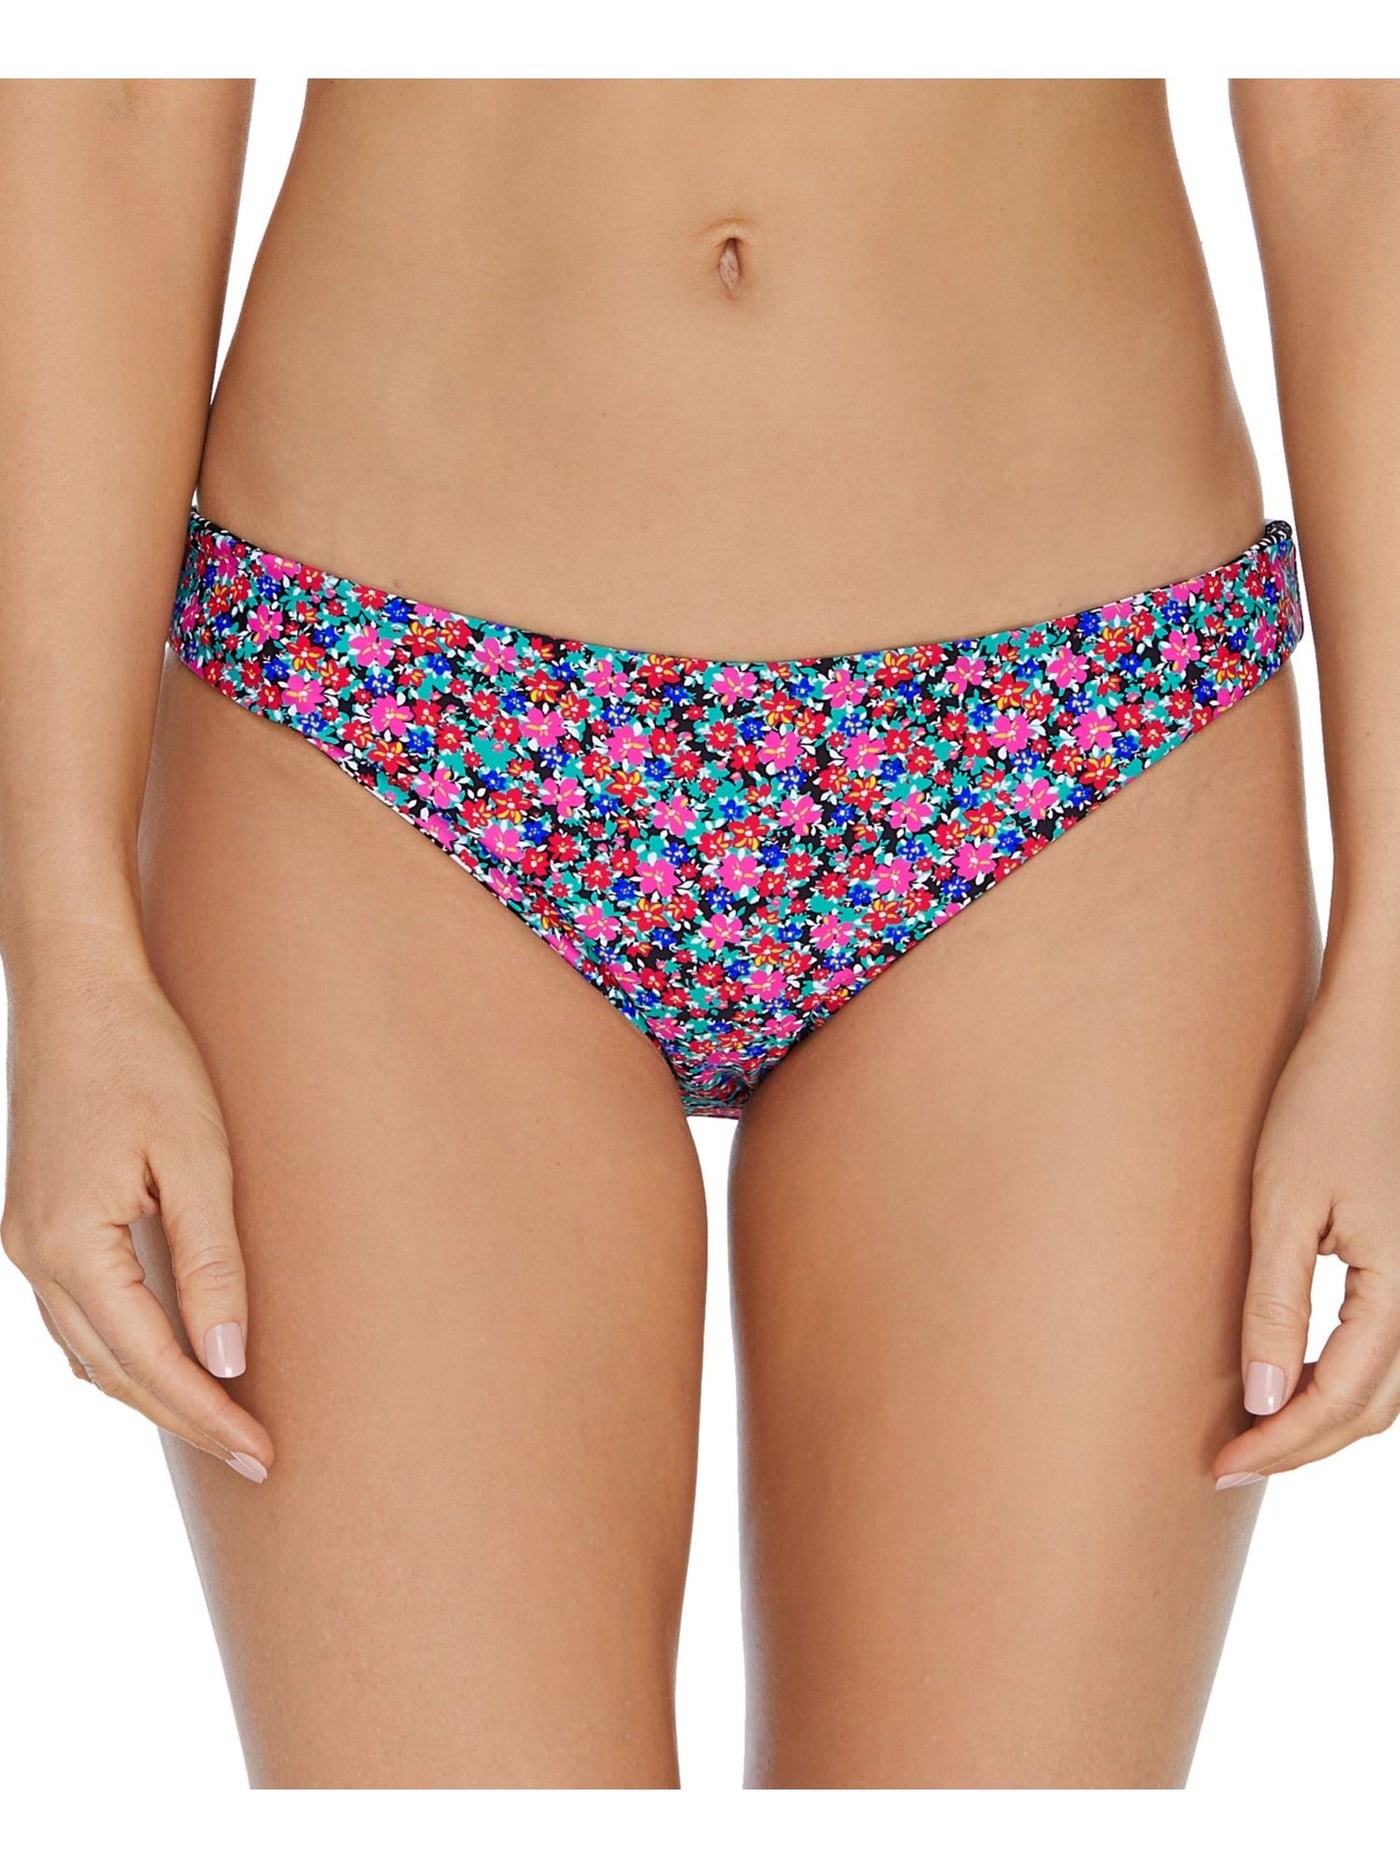 RAISINS Women's Pink Floral Stretch Lined Reversible Full Coverage Sunshine Gypsy Bikini Swimsuit Bottom S